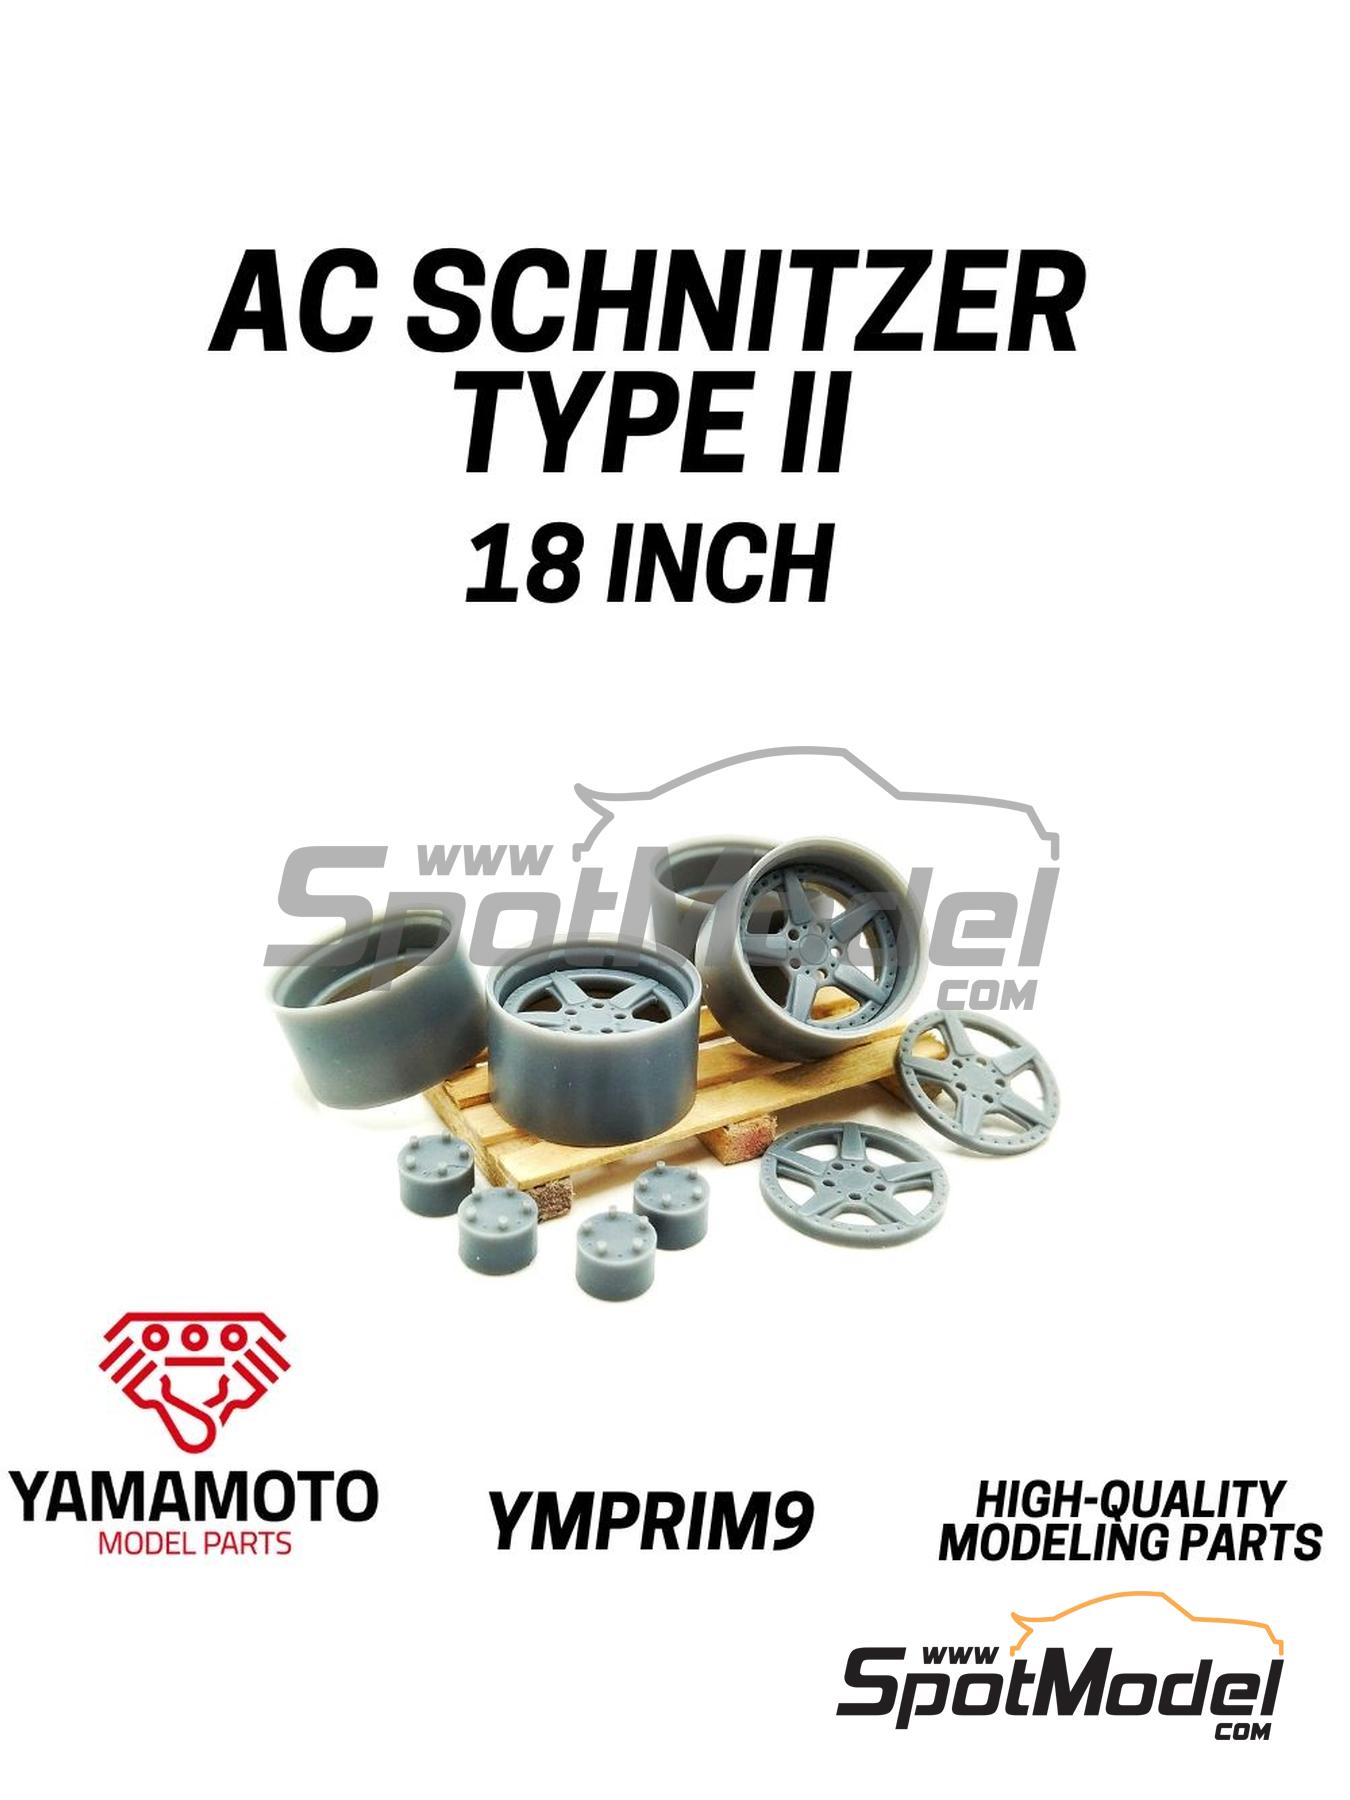 Yamamoto Model Parts YMPRIM9: Rims 1/24 scale - AC Schnitzer Type 2 18 inches 4 units (ref. YMPRIM9) SpotModel